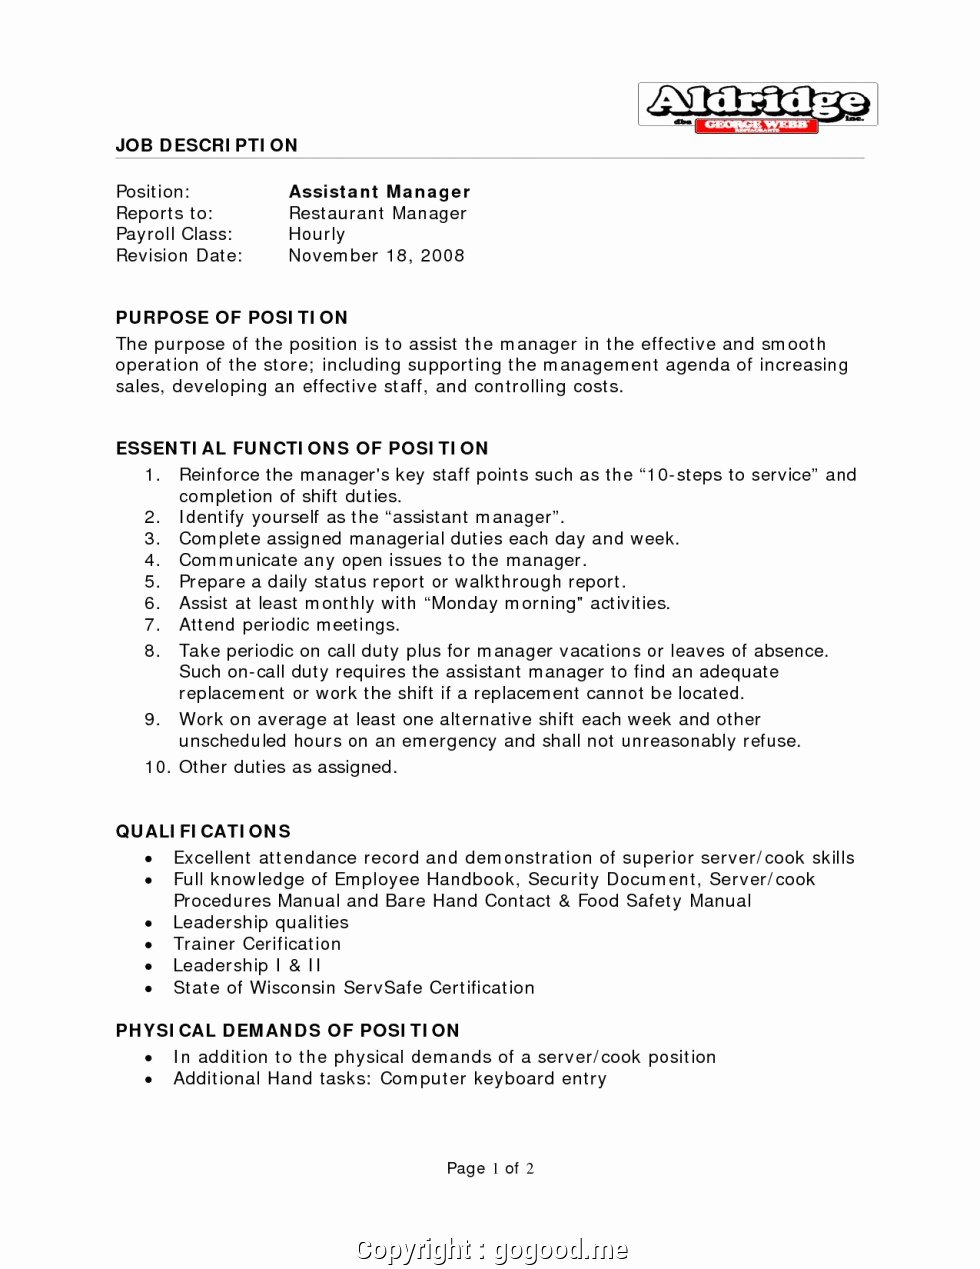 New Restaurant assistant Manager Job Description for